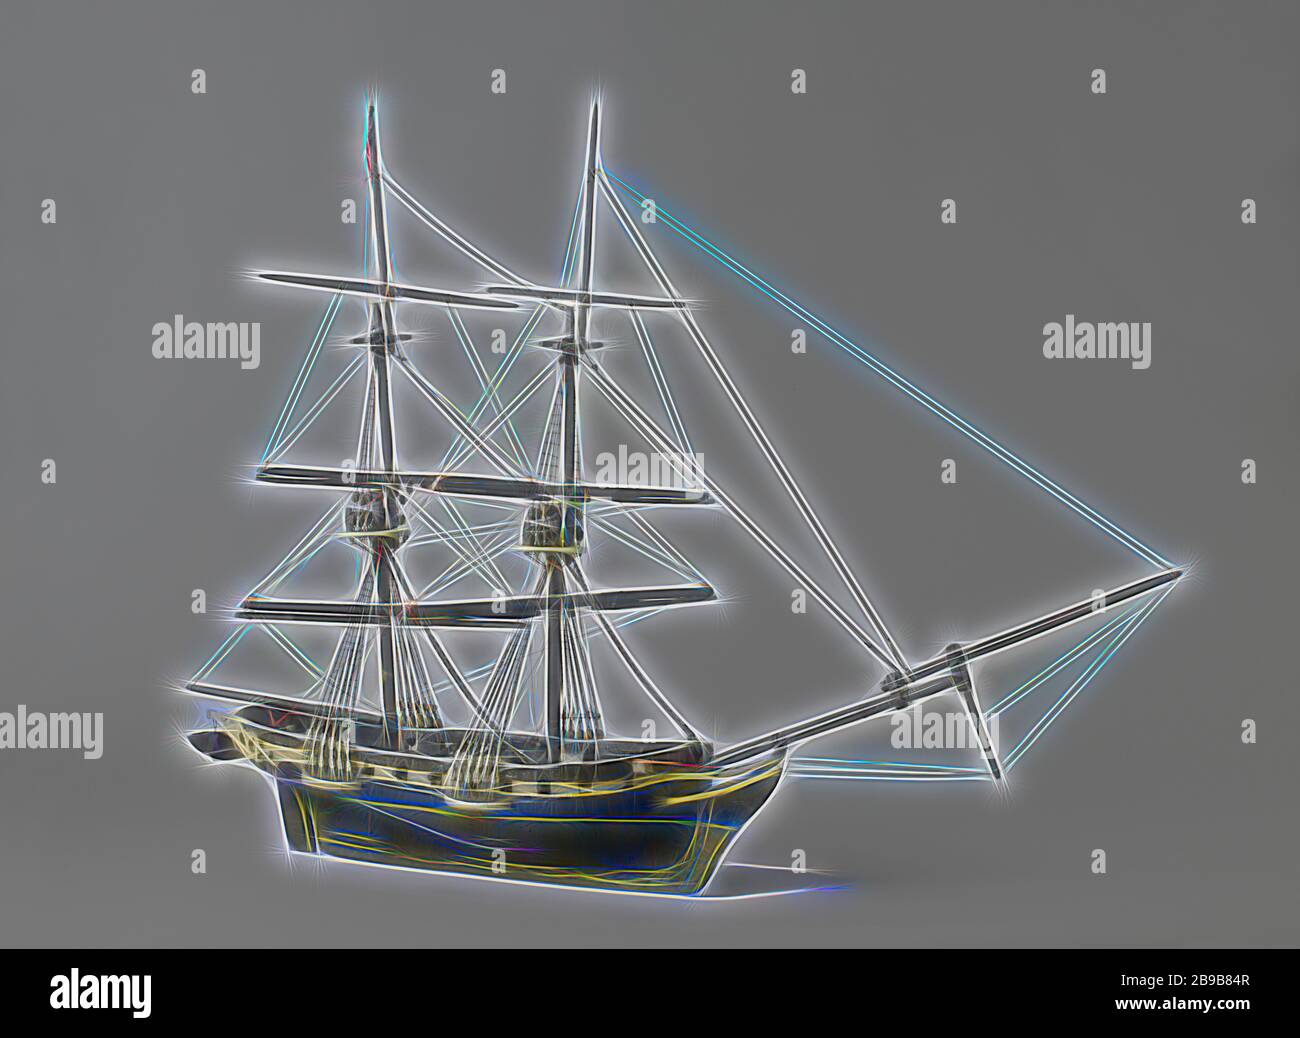 Modelo de barco de juguete, anónimo, países Bajos, c. 1850 - c. 1870,  madera (material vegetal), cuerda, h 87 cm × l 121 cm × w 21 cm h 99 cm ×